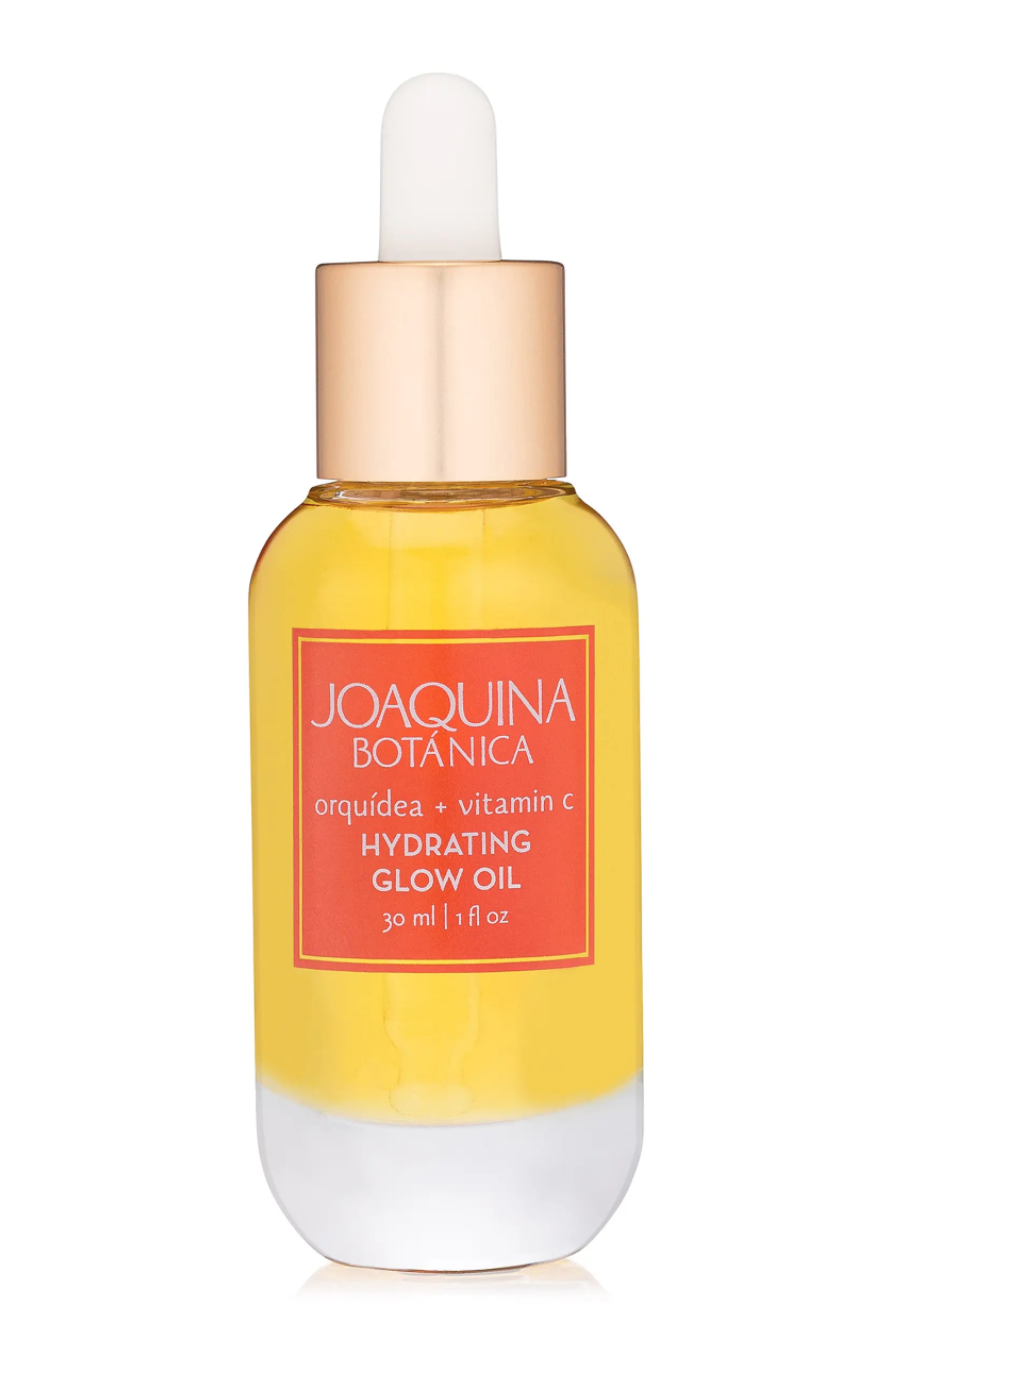 Joaquina Botanica Hydrating Face Oil, $88